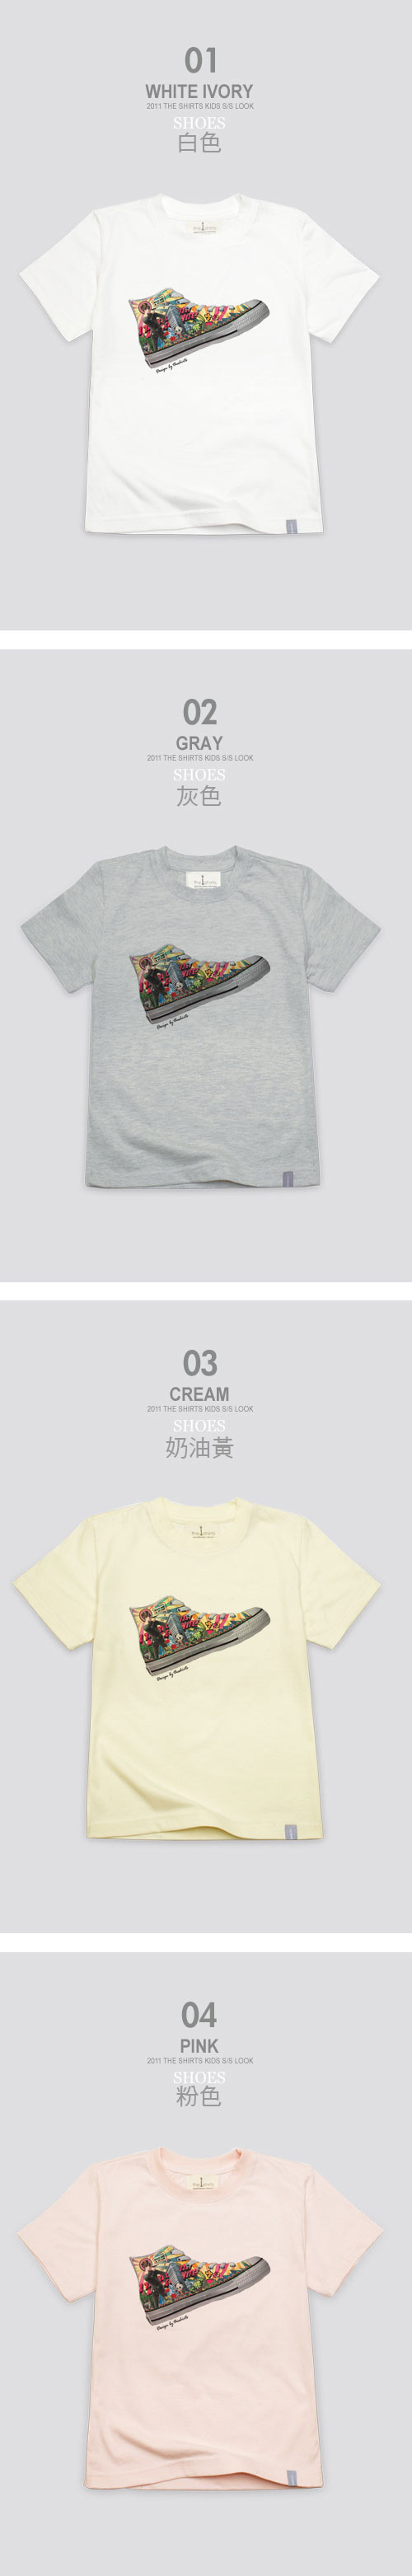 【The Shirts】美式漫畫布鞋短袖T恤 (白色)